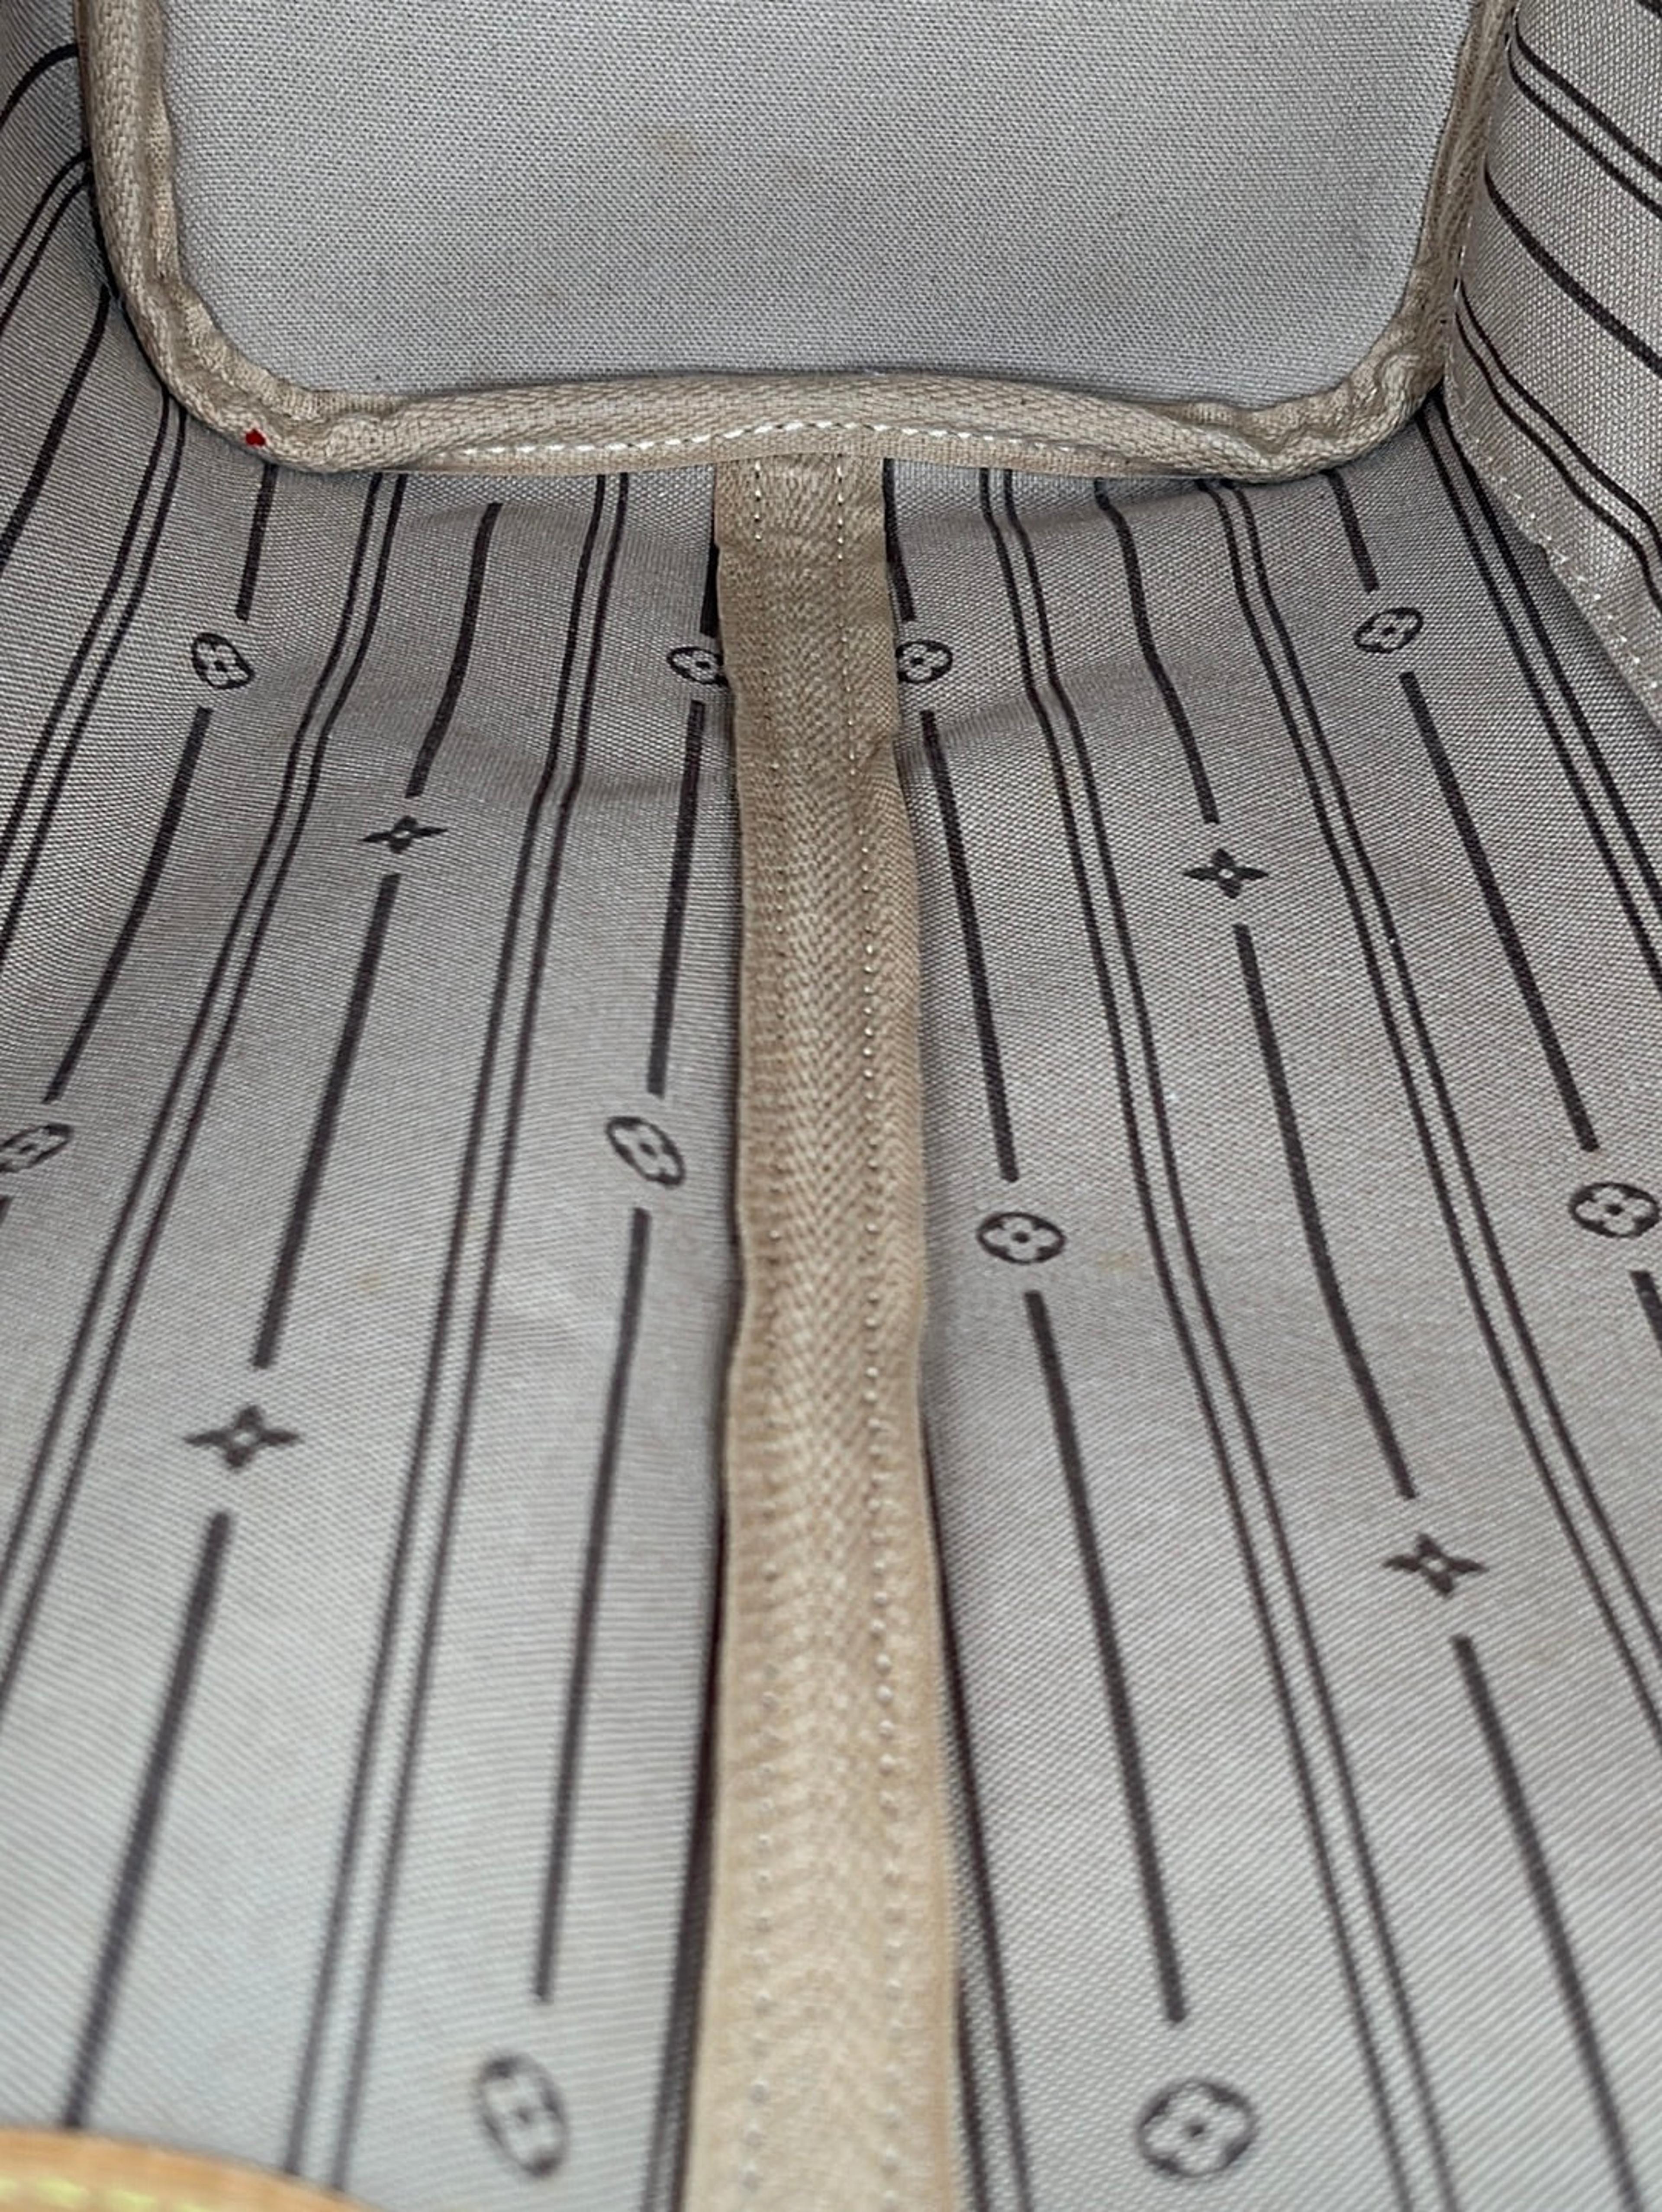 NTWRK - Preloved Louis Vuitton Monogram Neverfull MM Tote Bag (Tan Inte